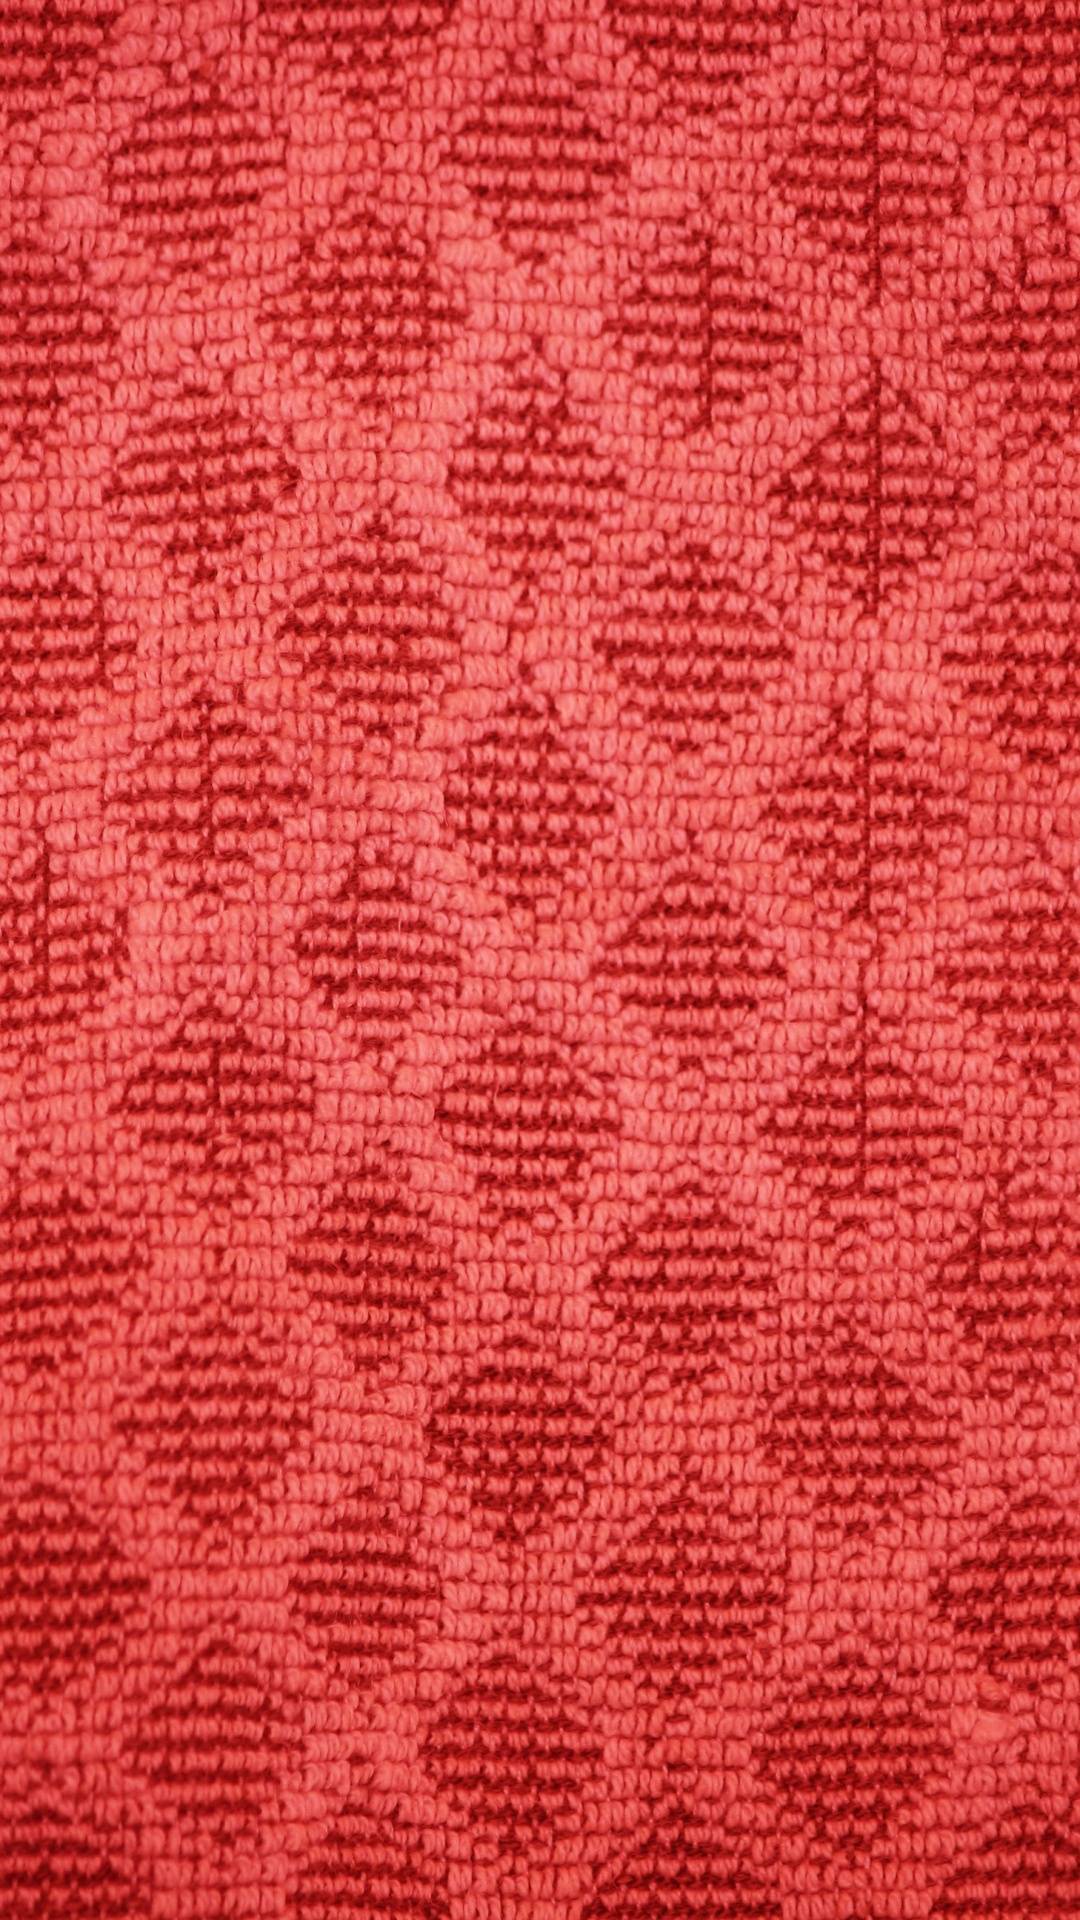 Textil Floral Rojo y Blanco. Wallpaper in 1080x1920 Resolution